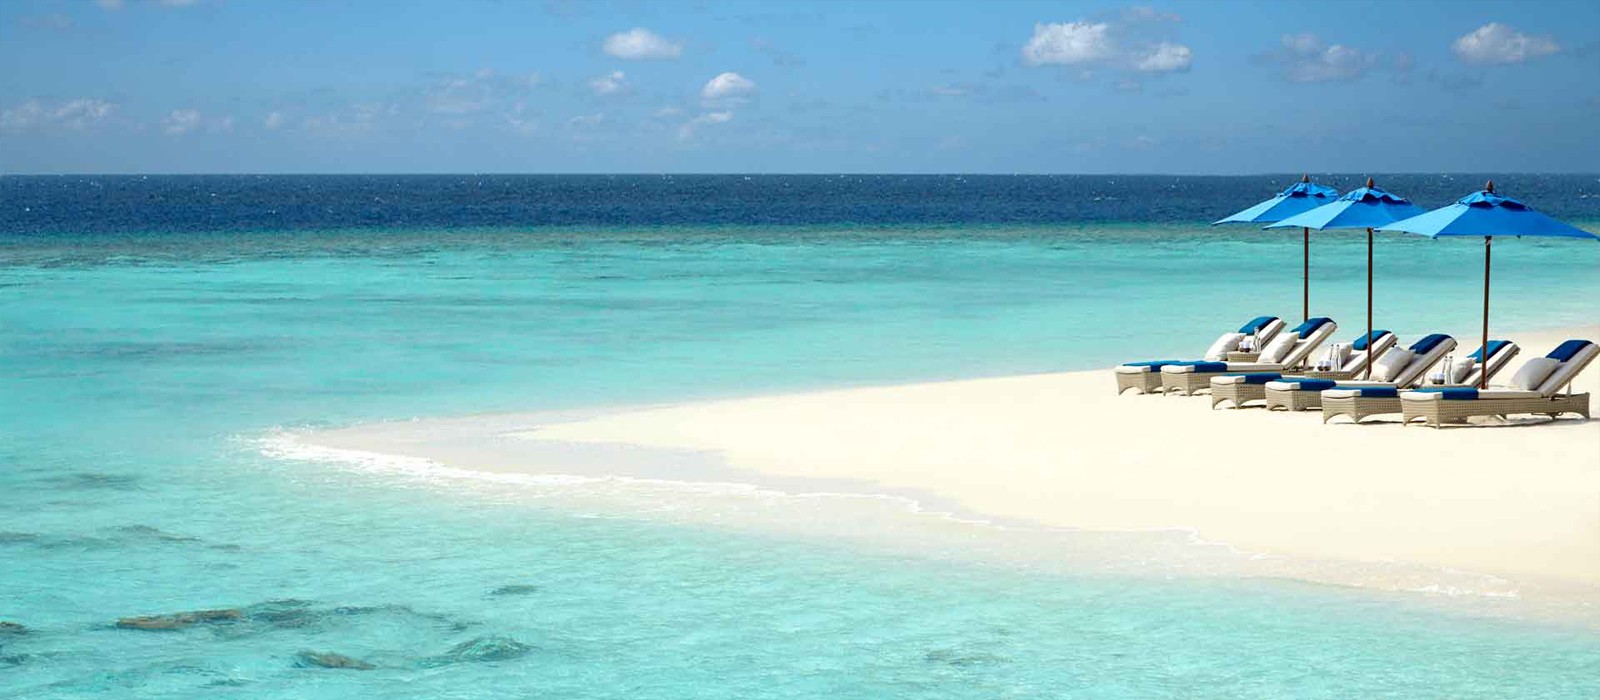 dusit thani - maldives - beach - header